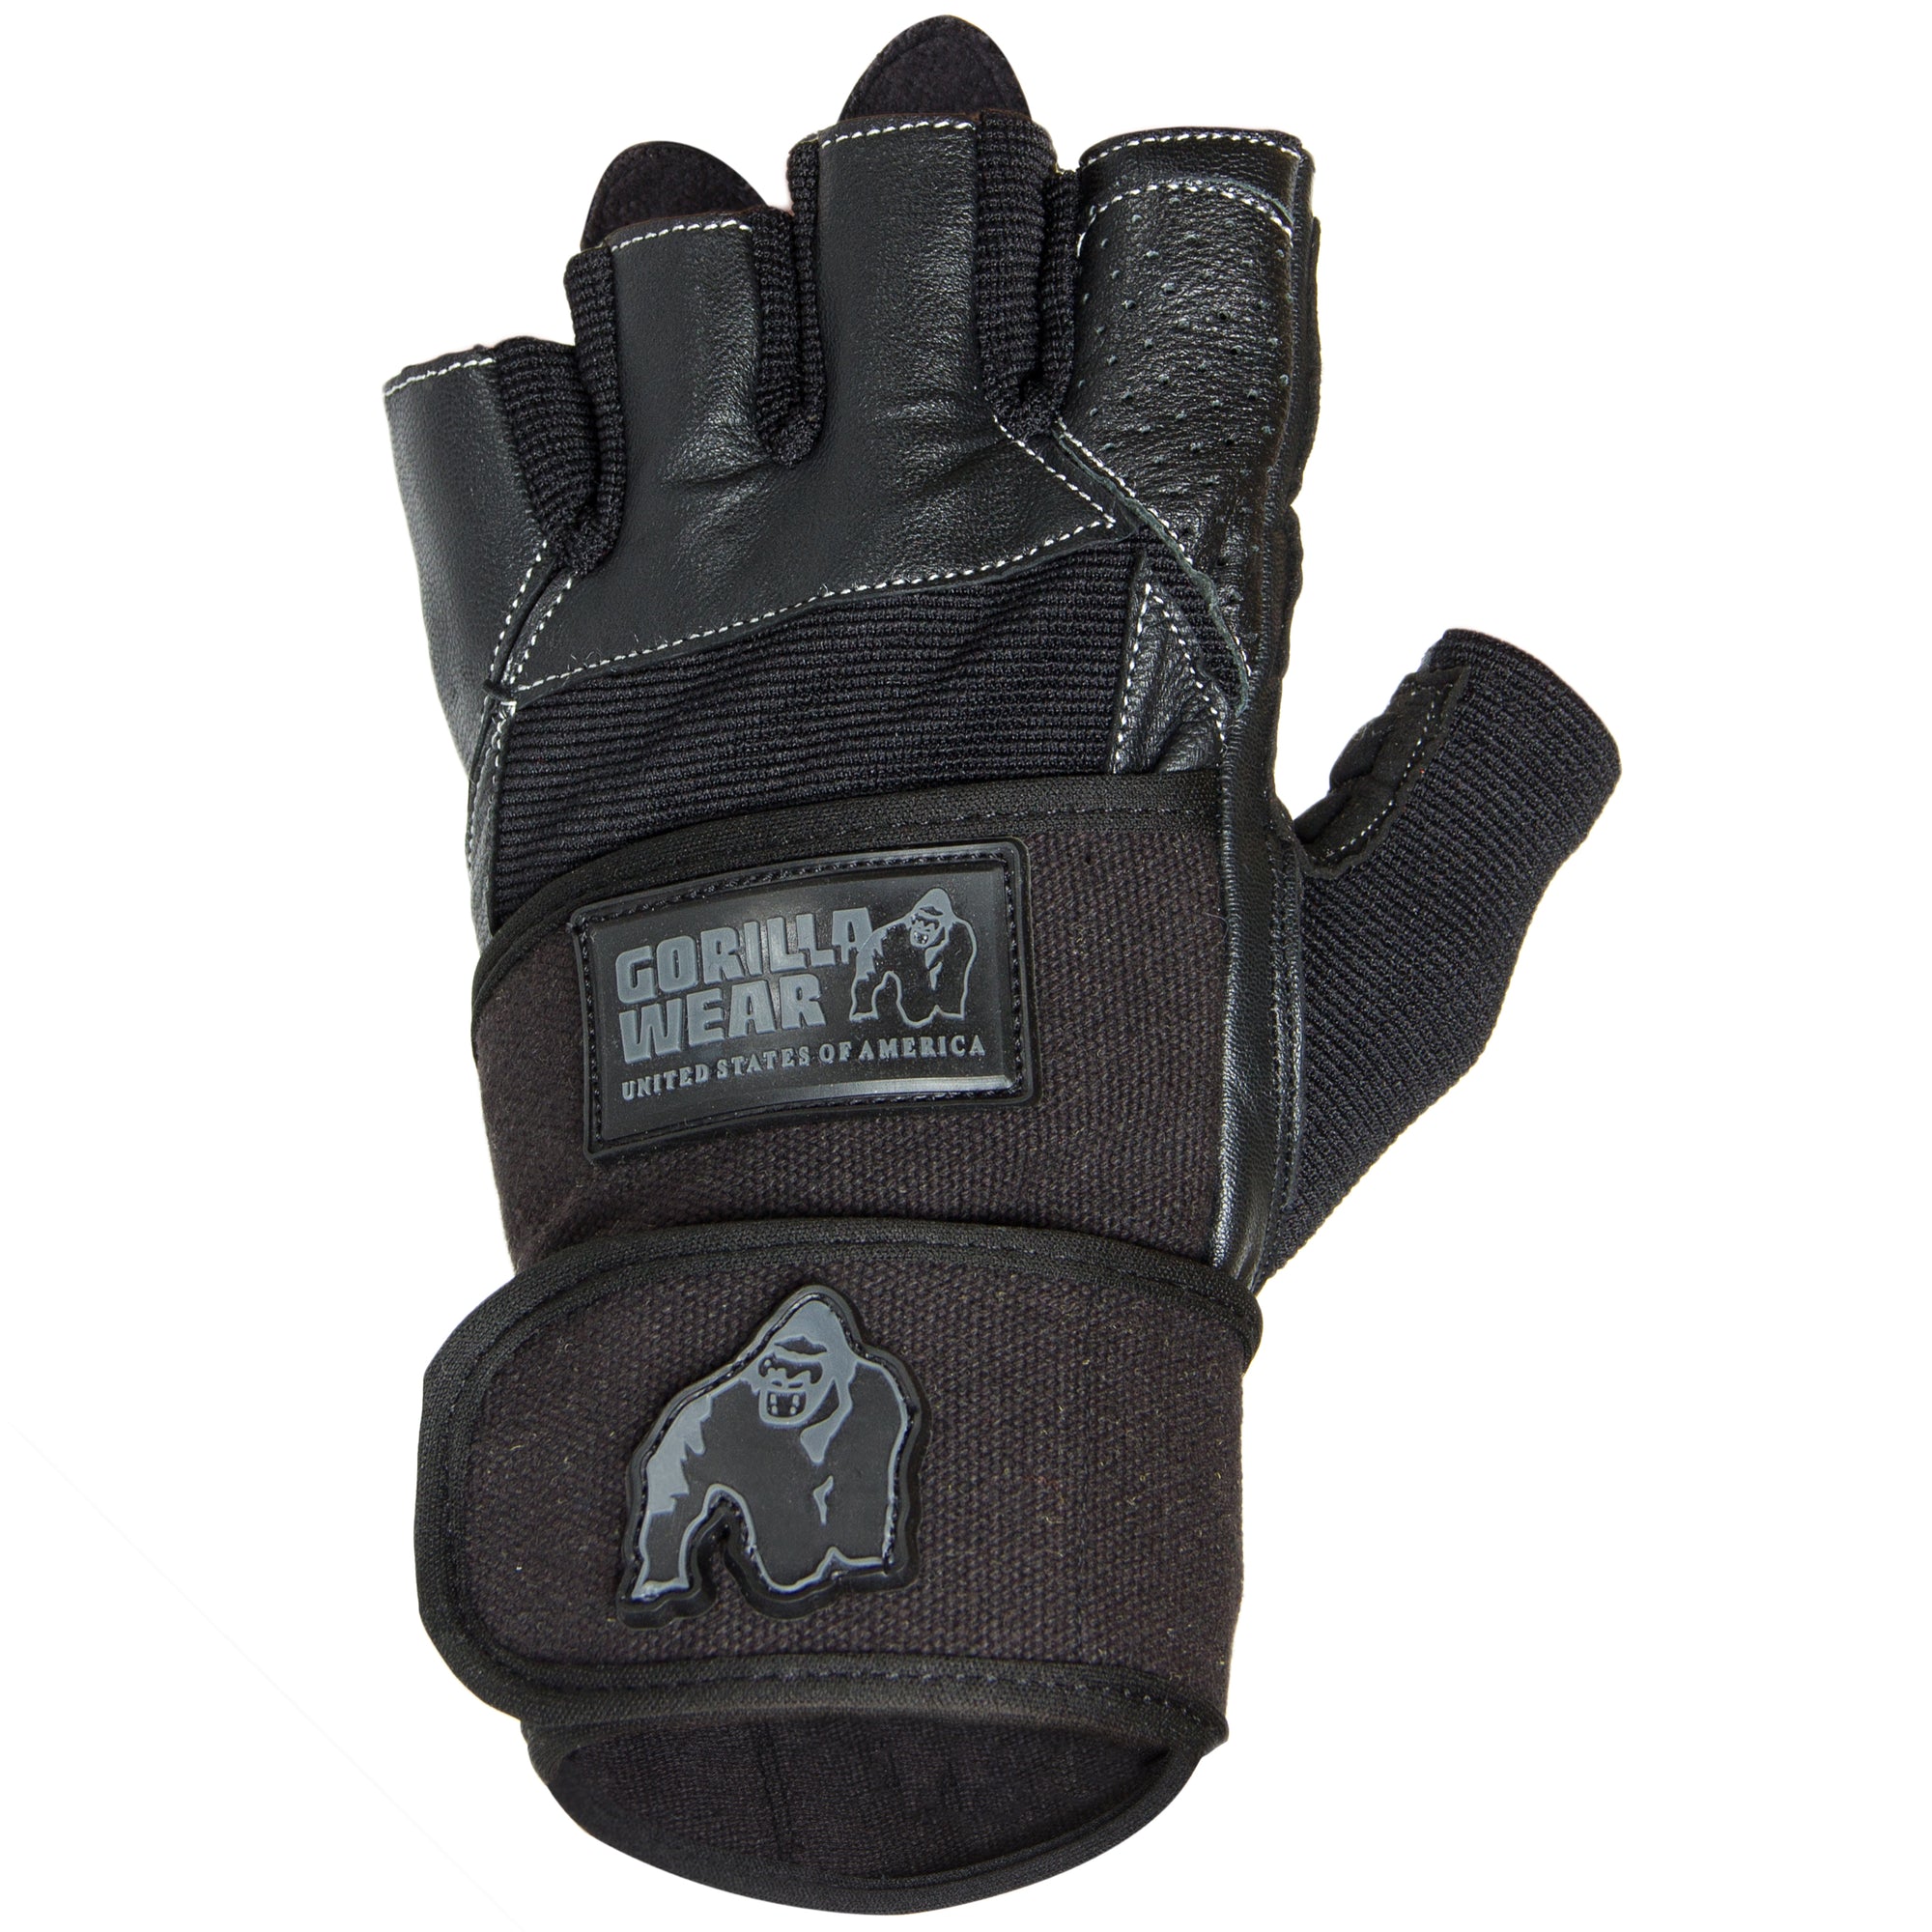 Gorilla Wear Dallas Wrist Wrap Gloves - Musta